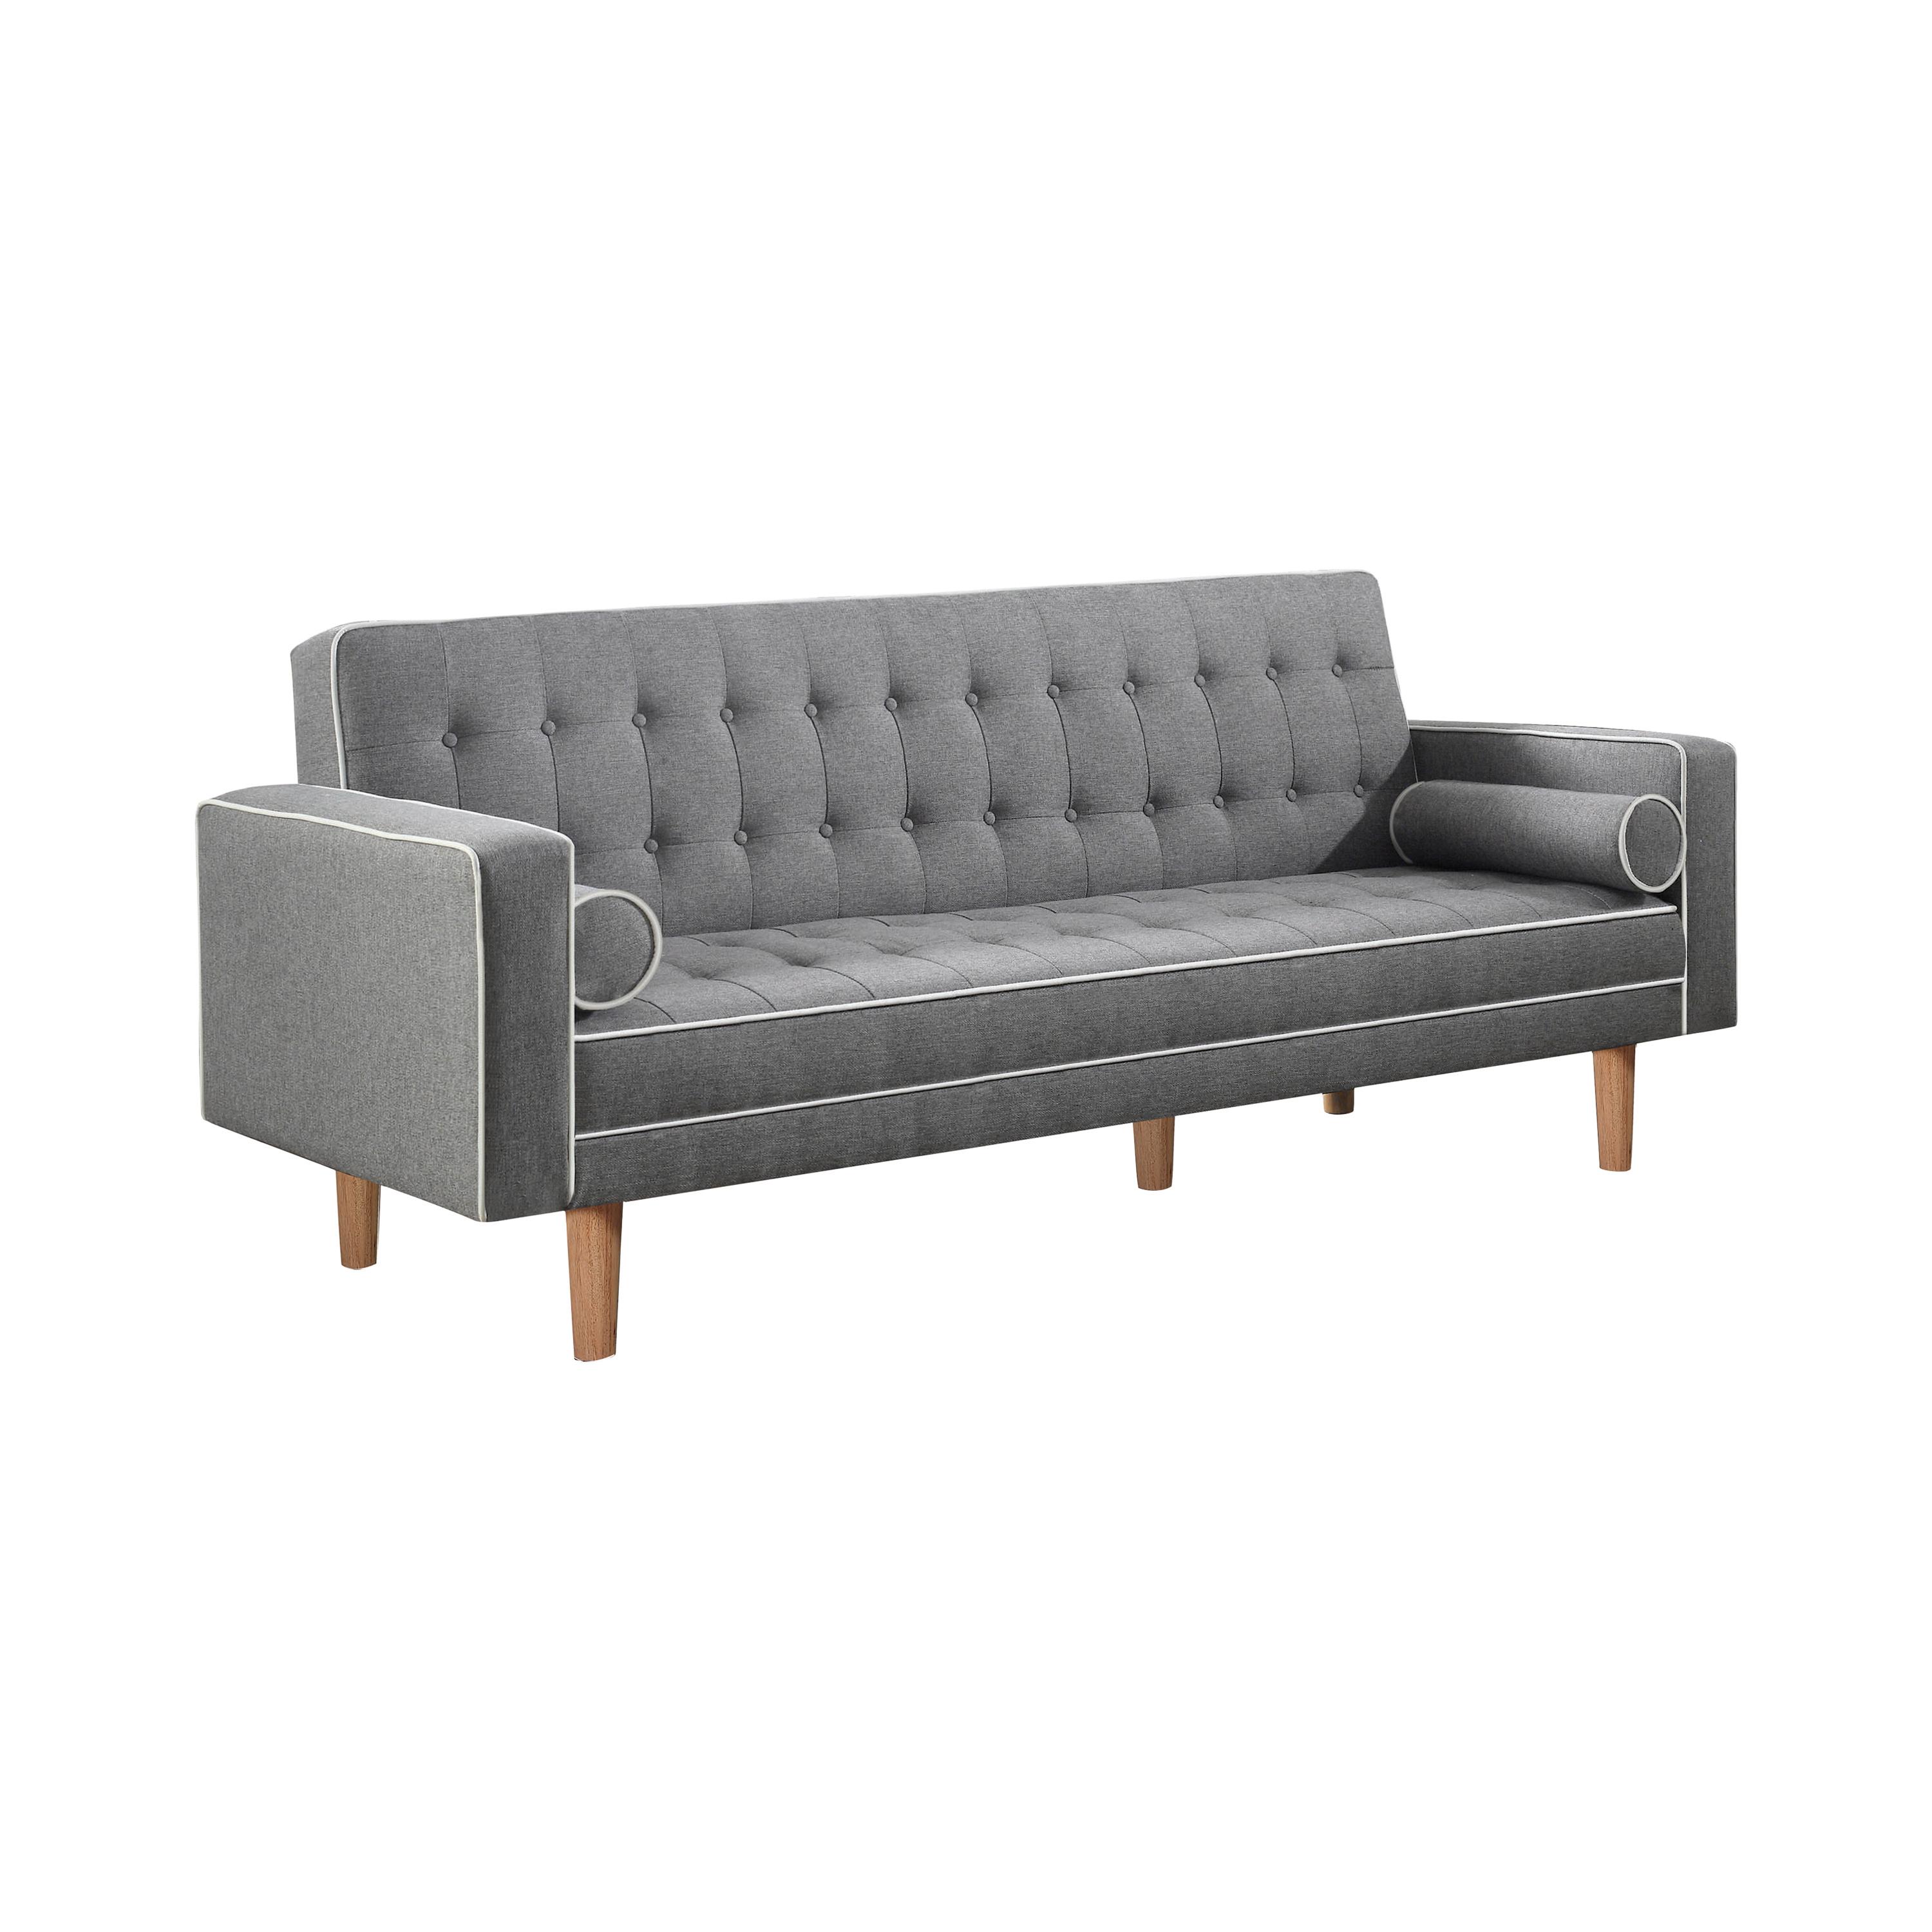 Contemporary Sofa bed 350405 Lassen 350405 in Gray 